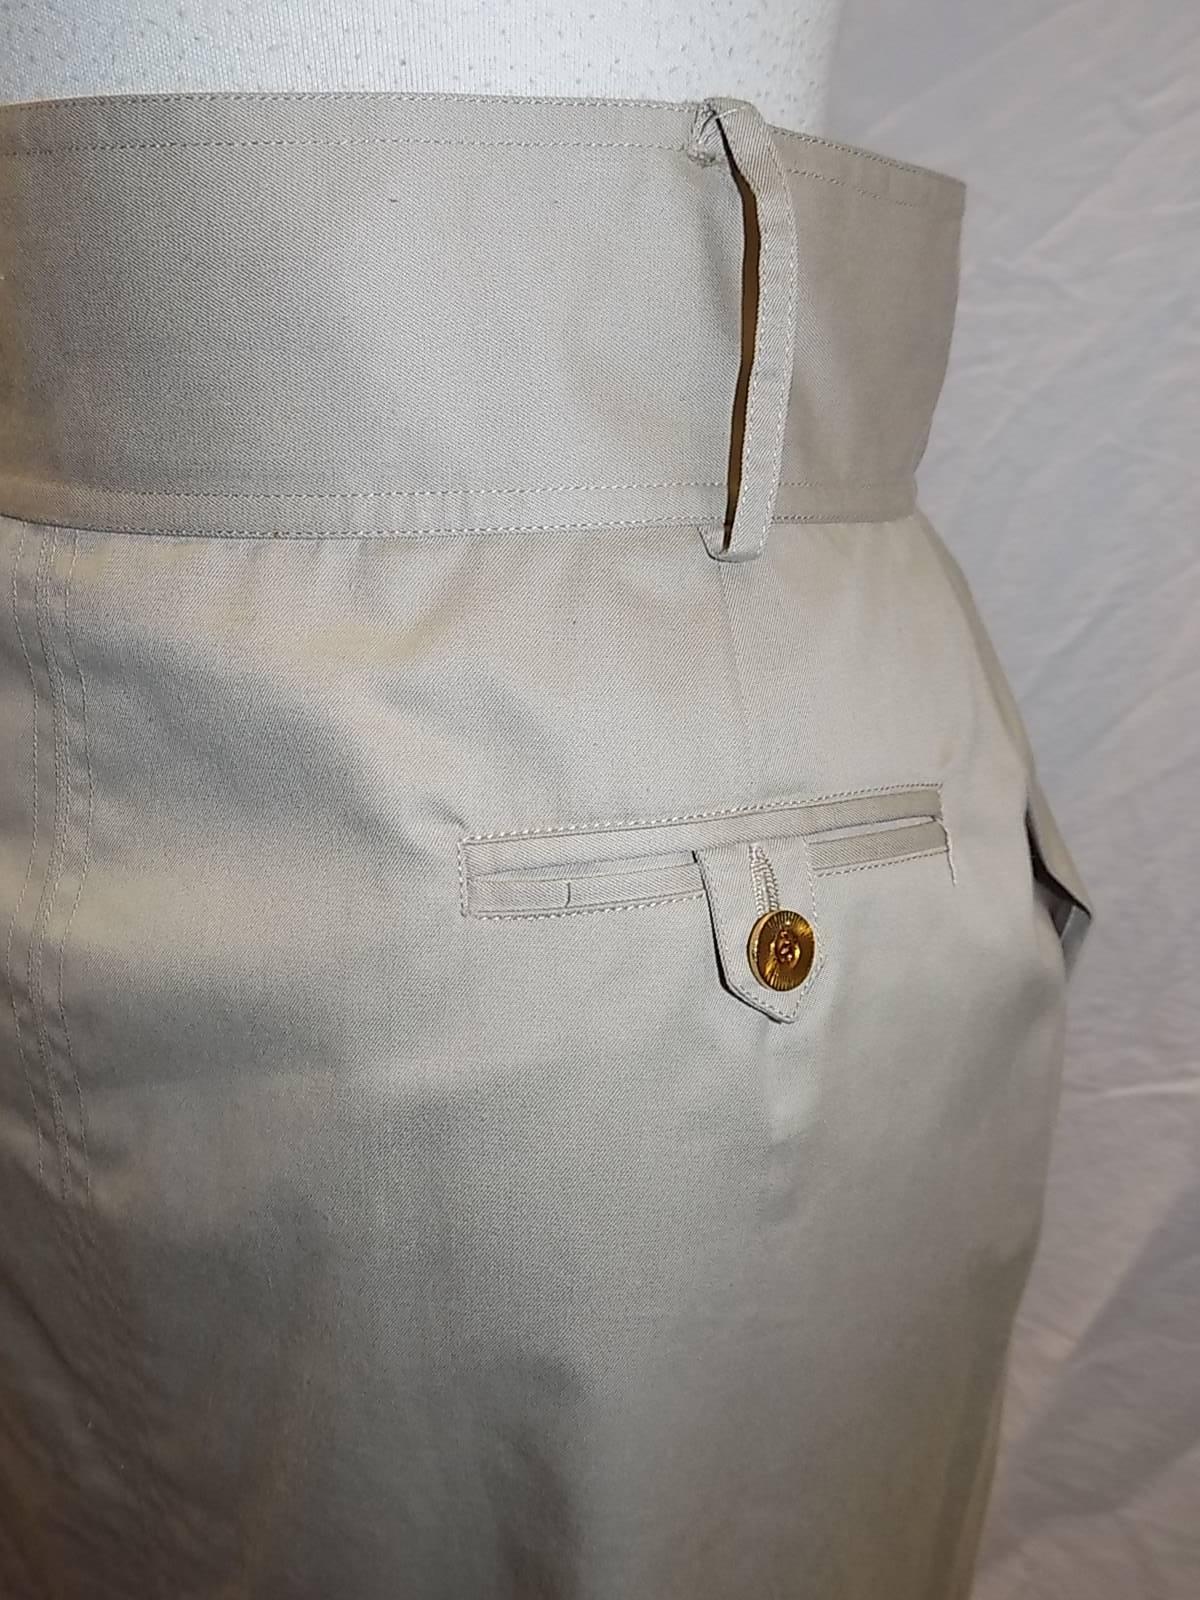 Women's Chanel safari cotton skirt